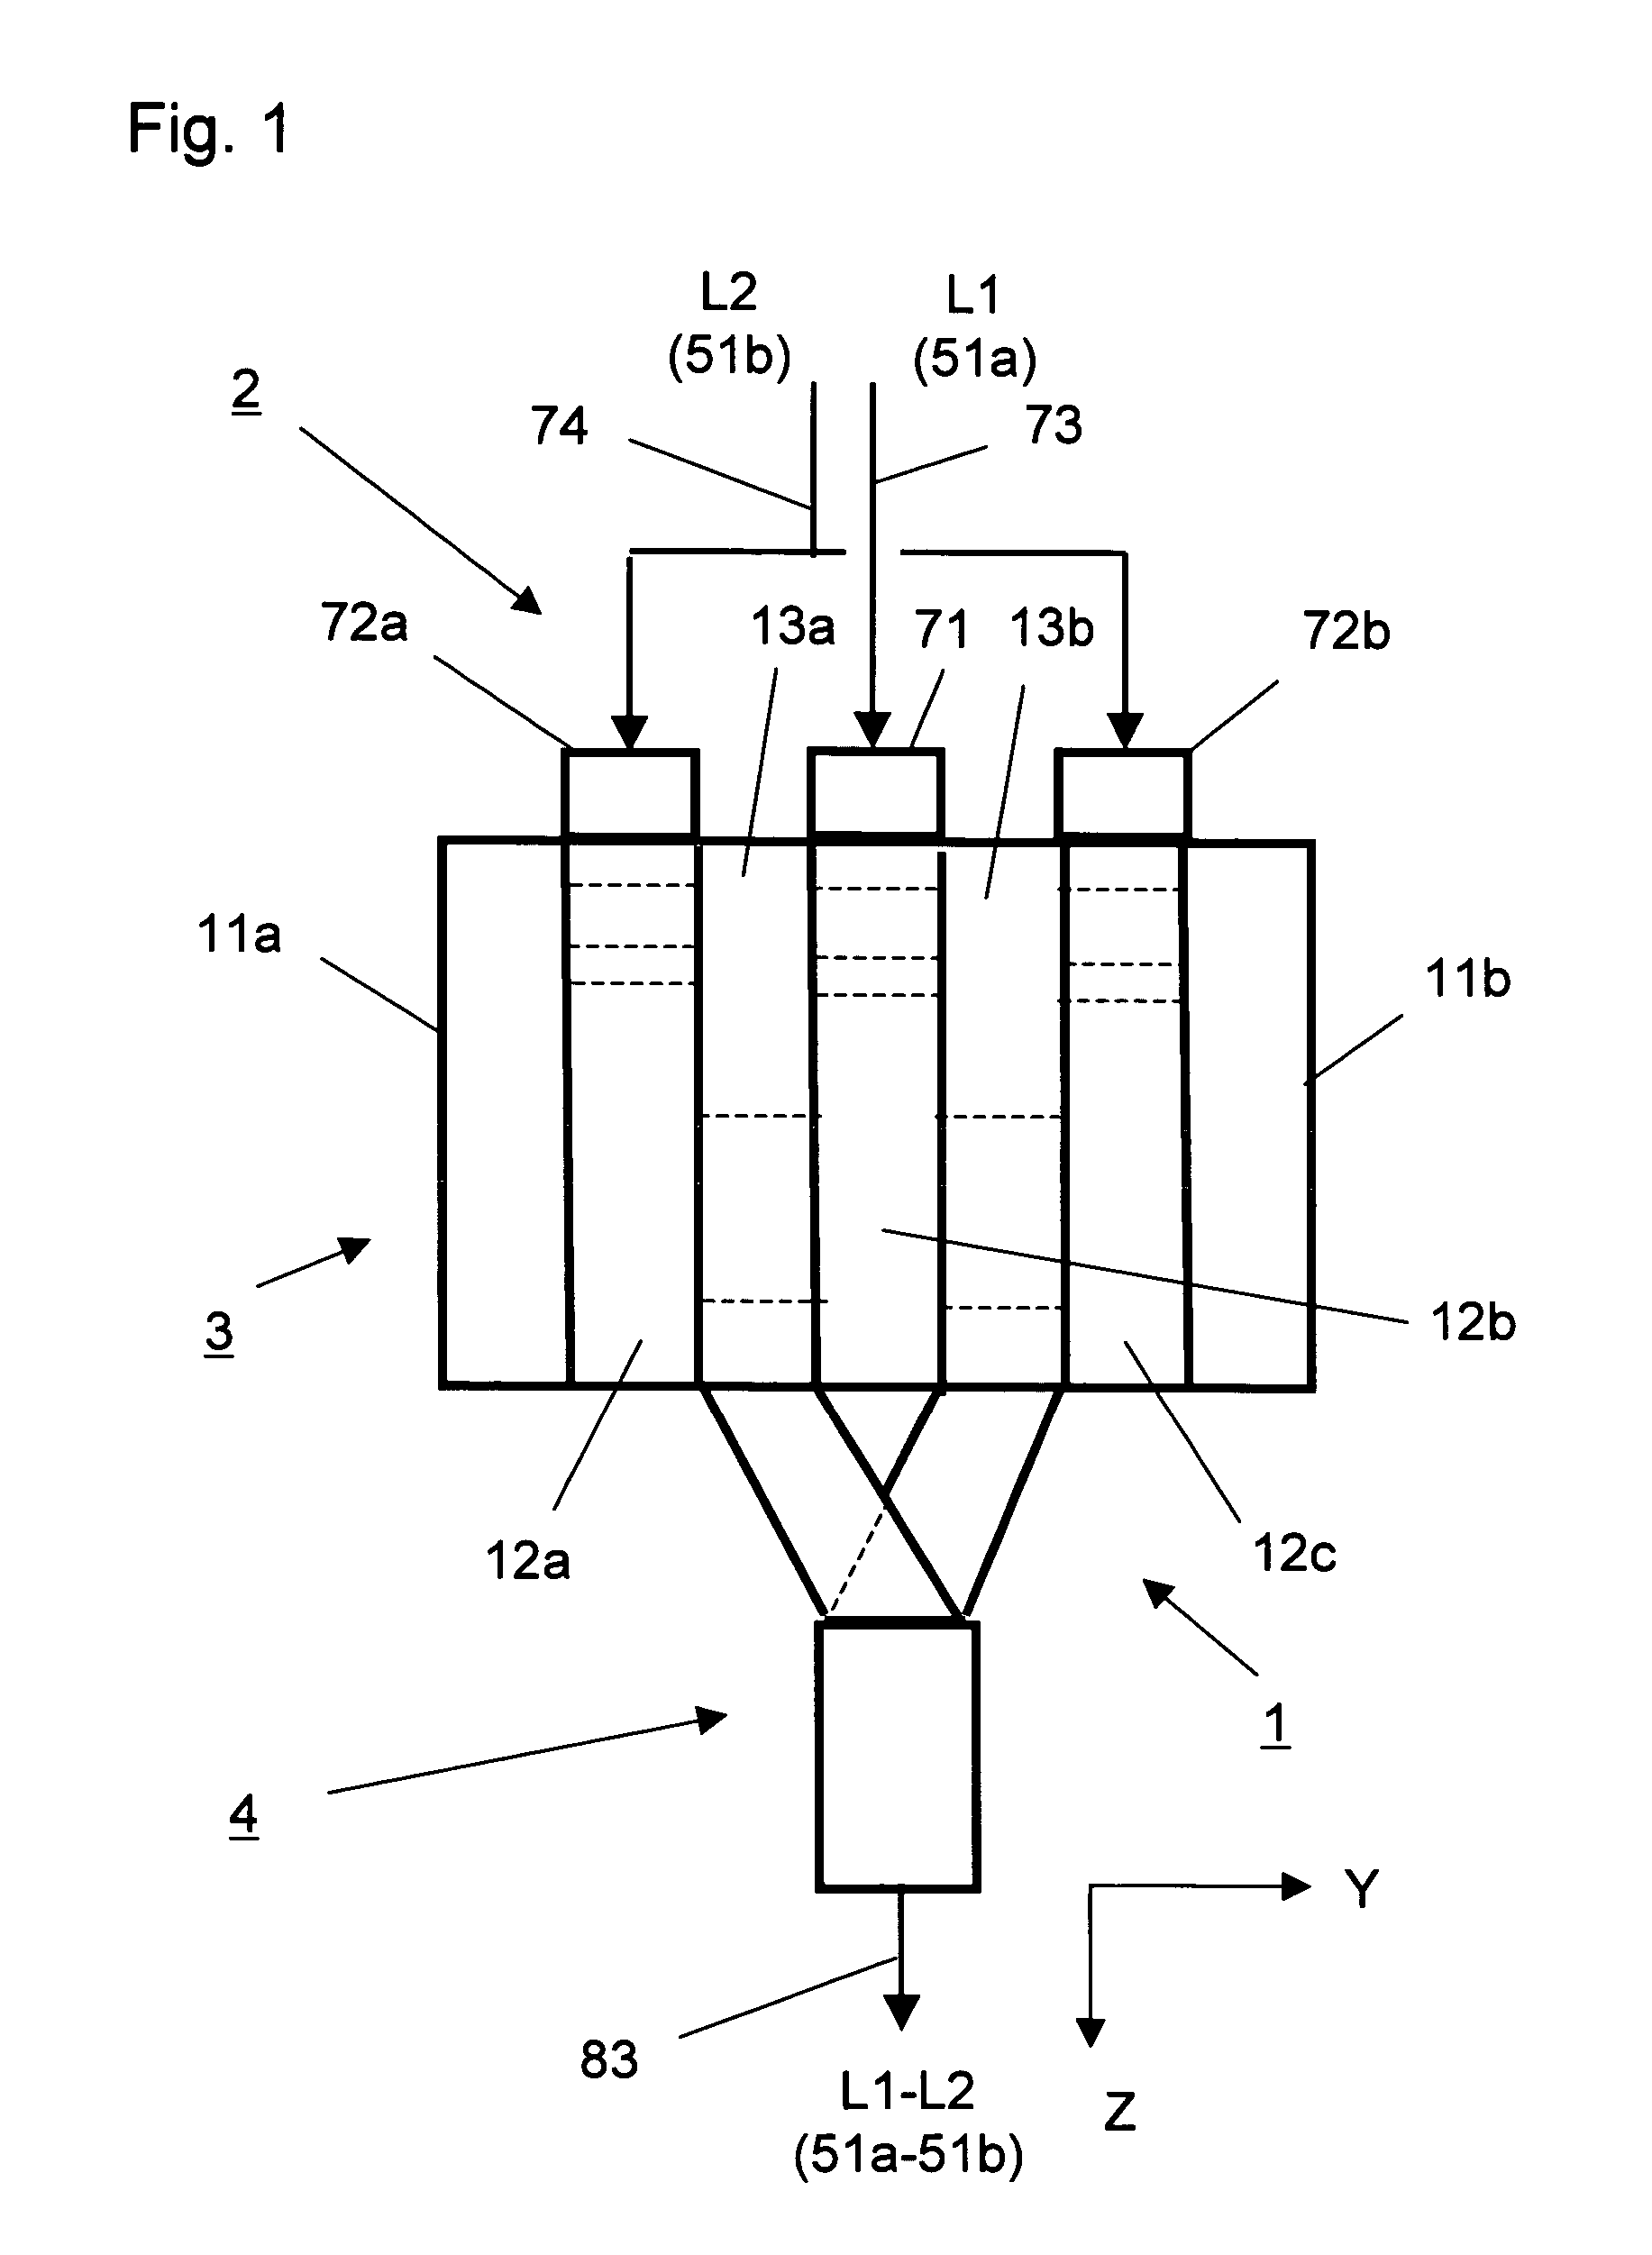 Liquid flow converging device and method of manufacturing multi-layer film